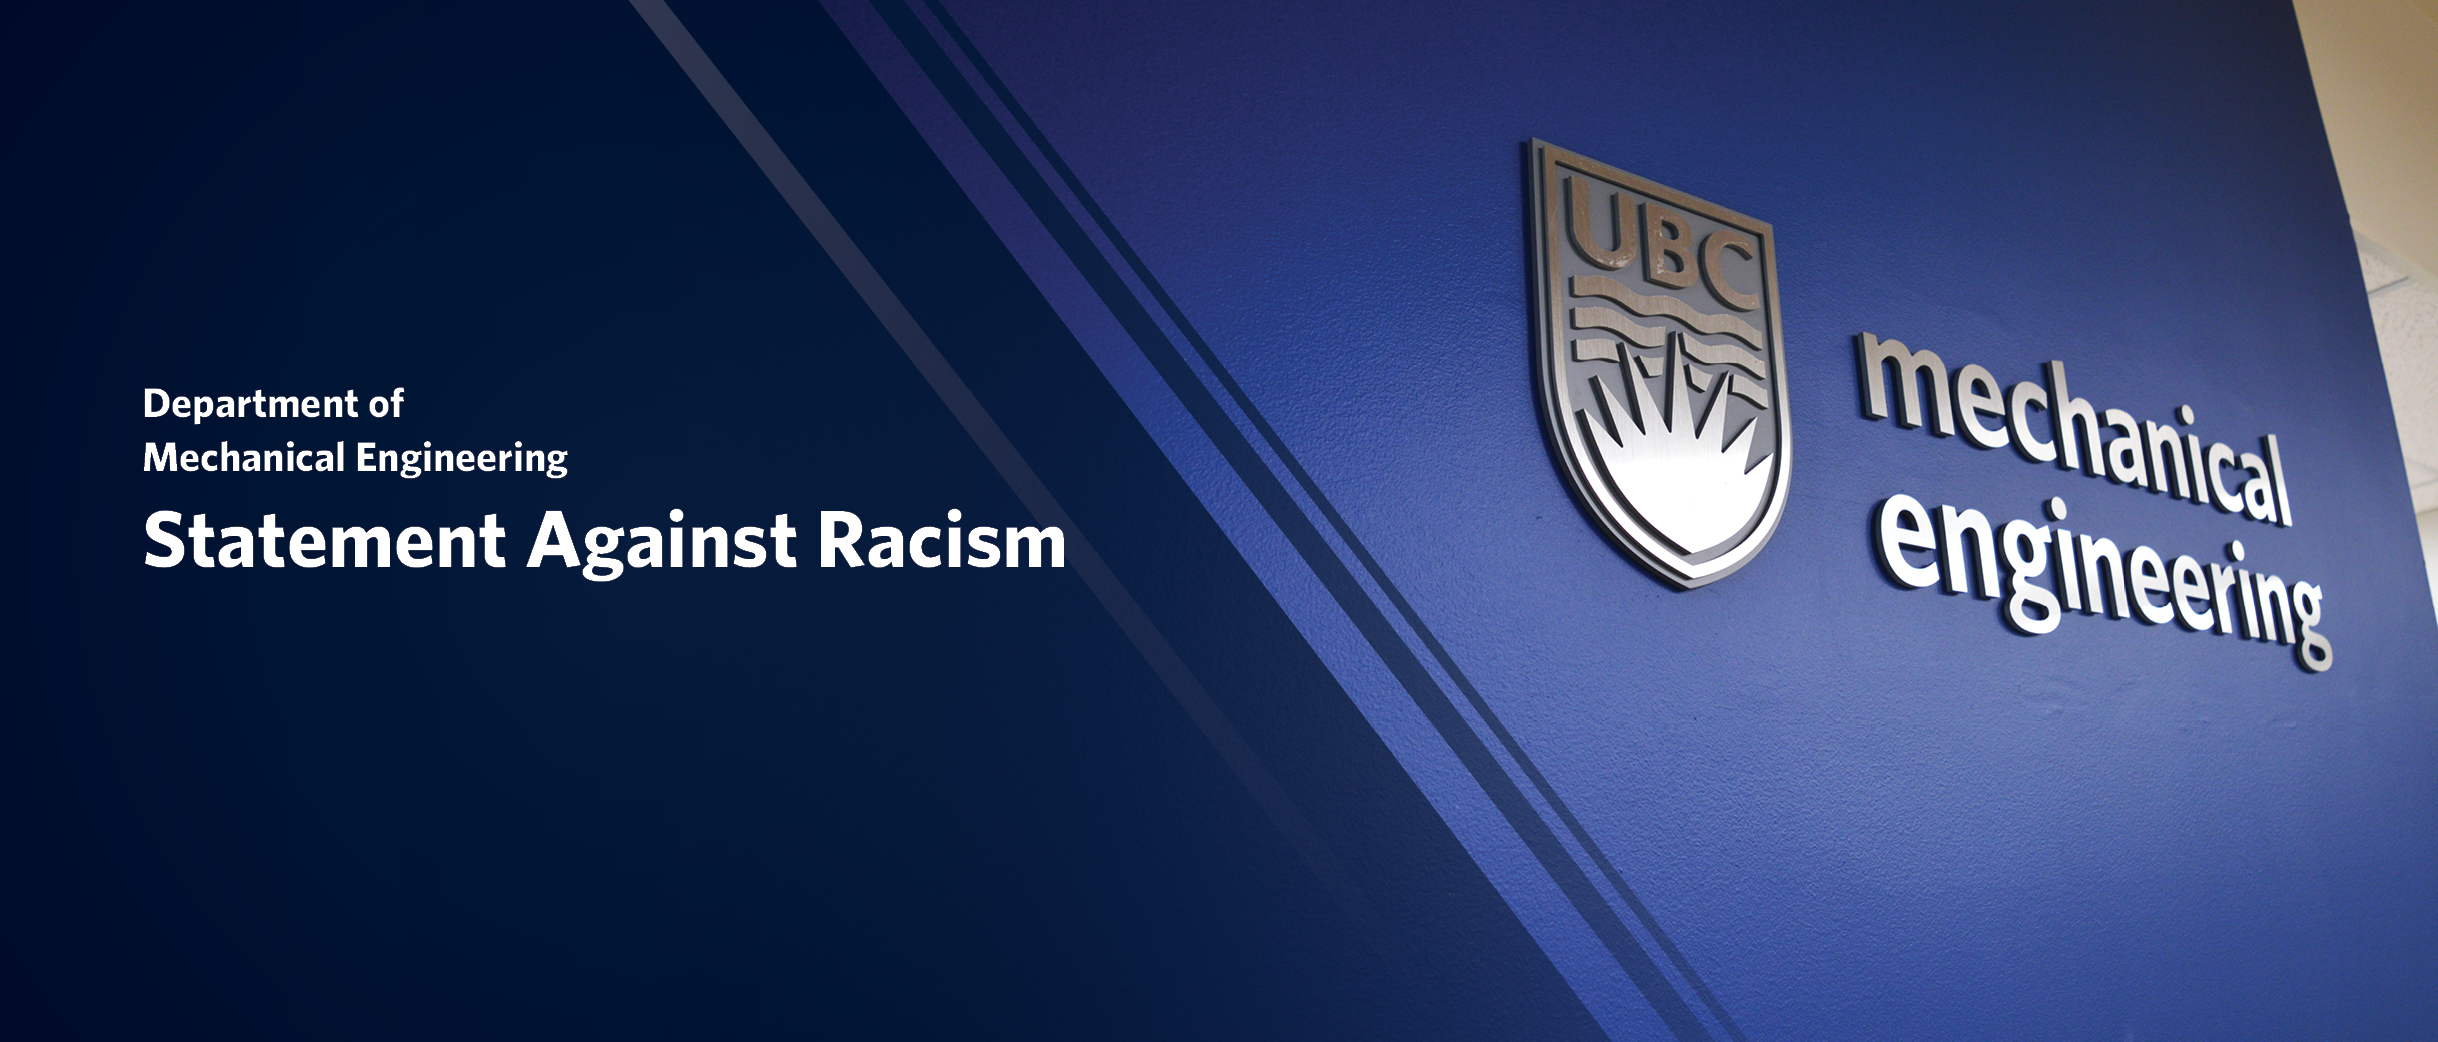 MECH Statement Against Racism